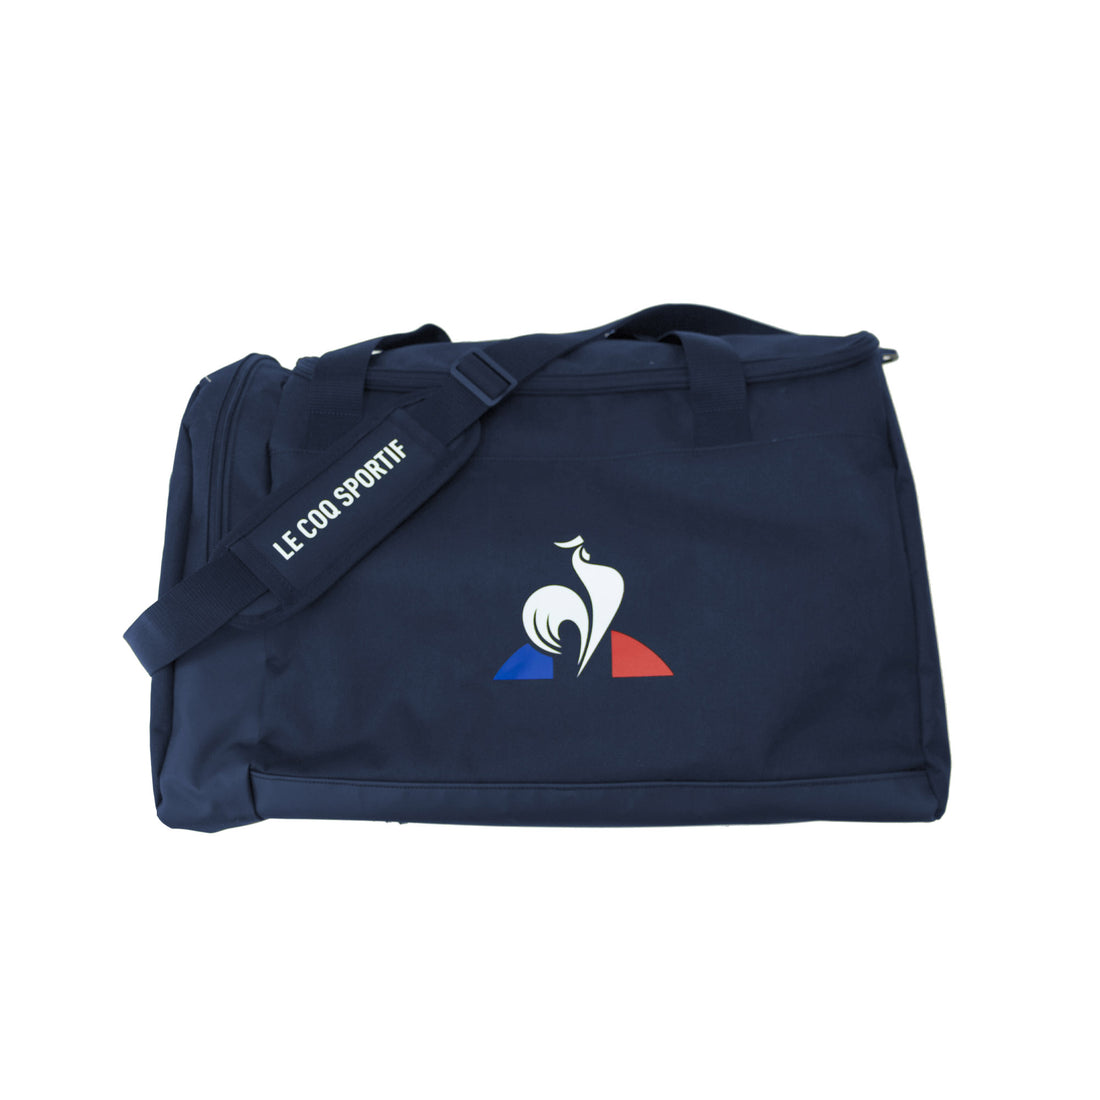 2020928-TRAINING Sportbag S/M dress blues  | Borsa de sport Unisex